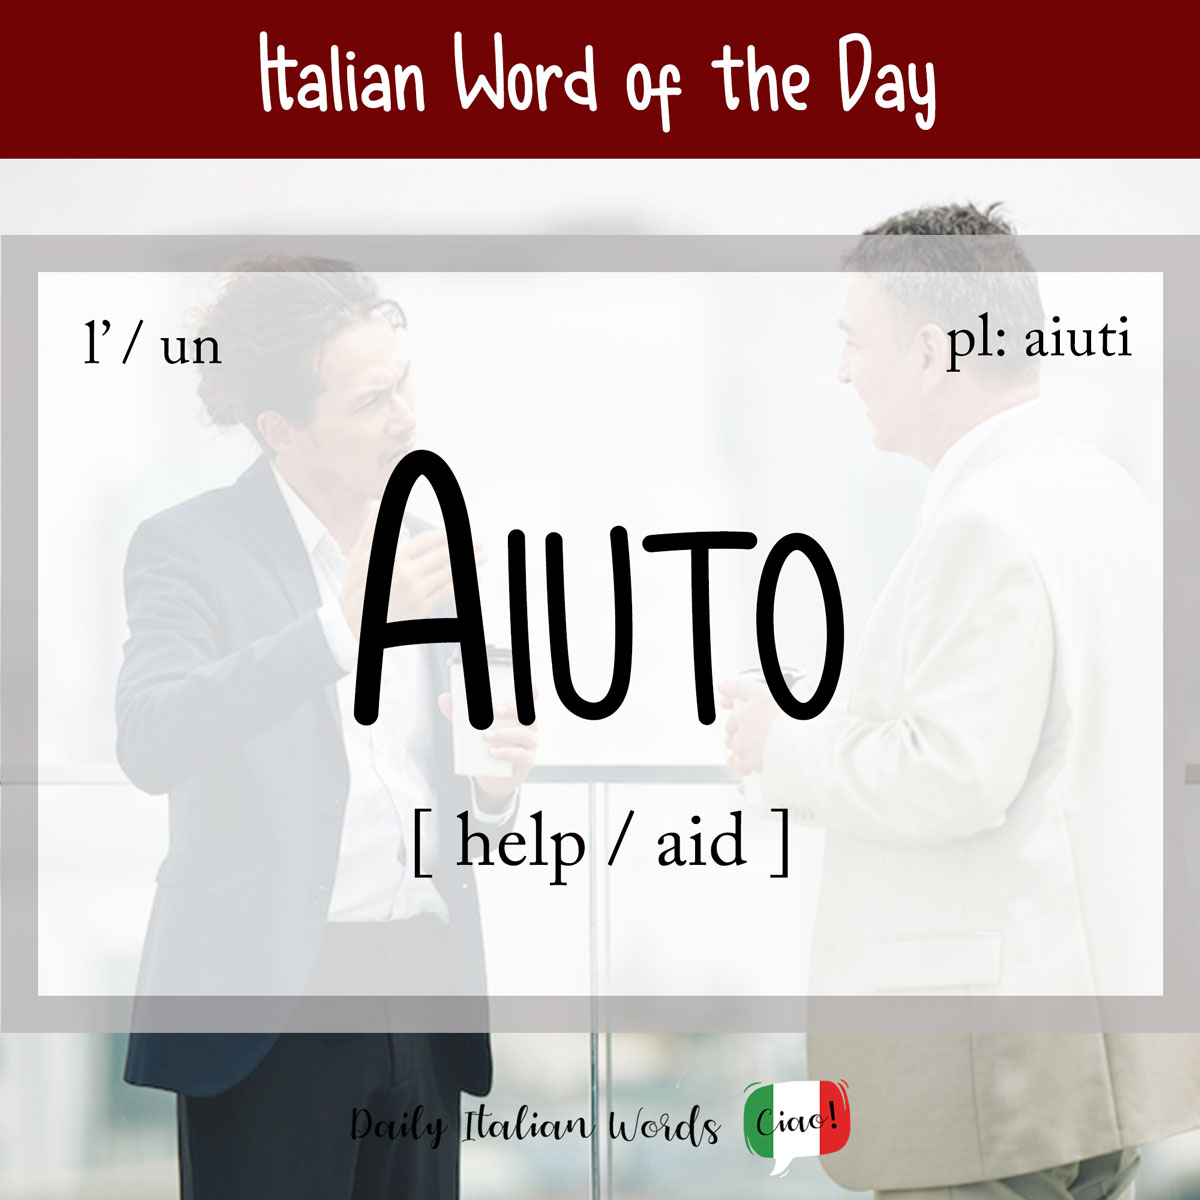 Italian Word of the Day: Aiuto (Help/Aid)